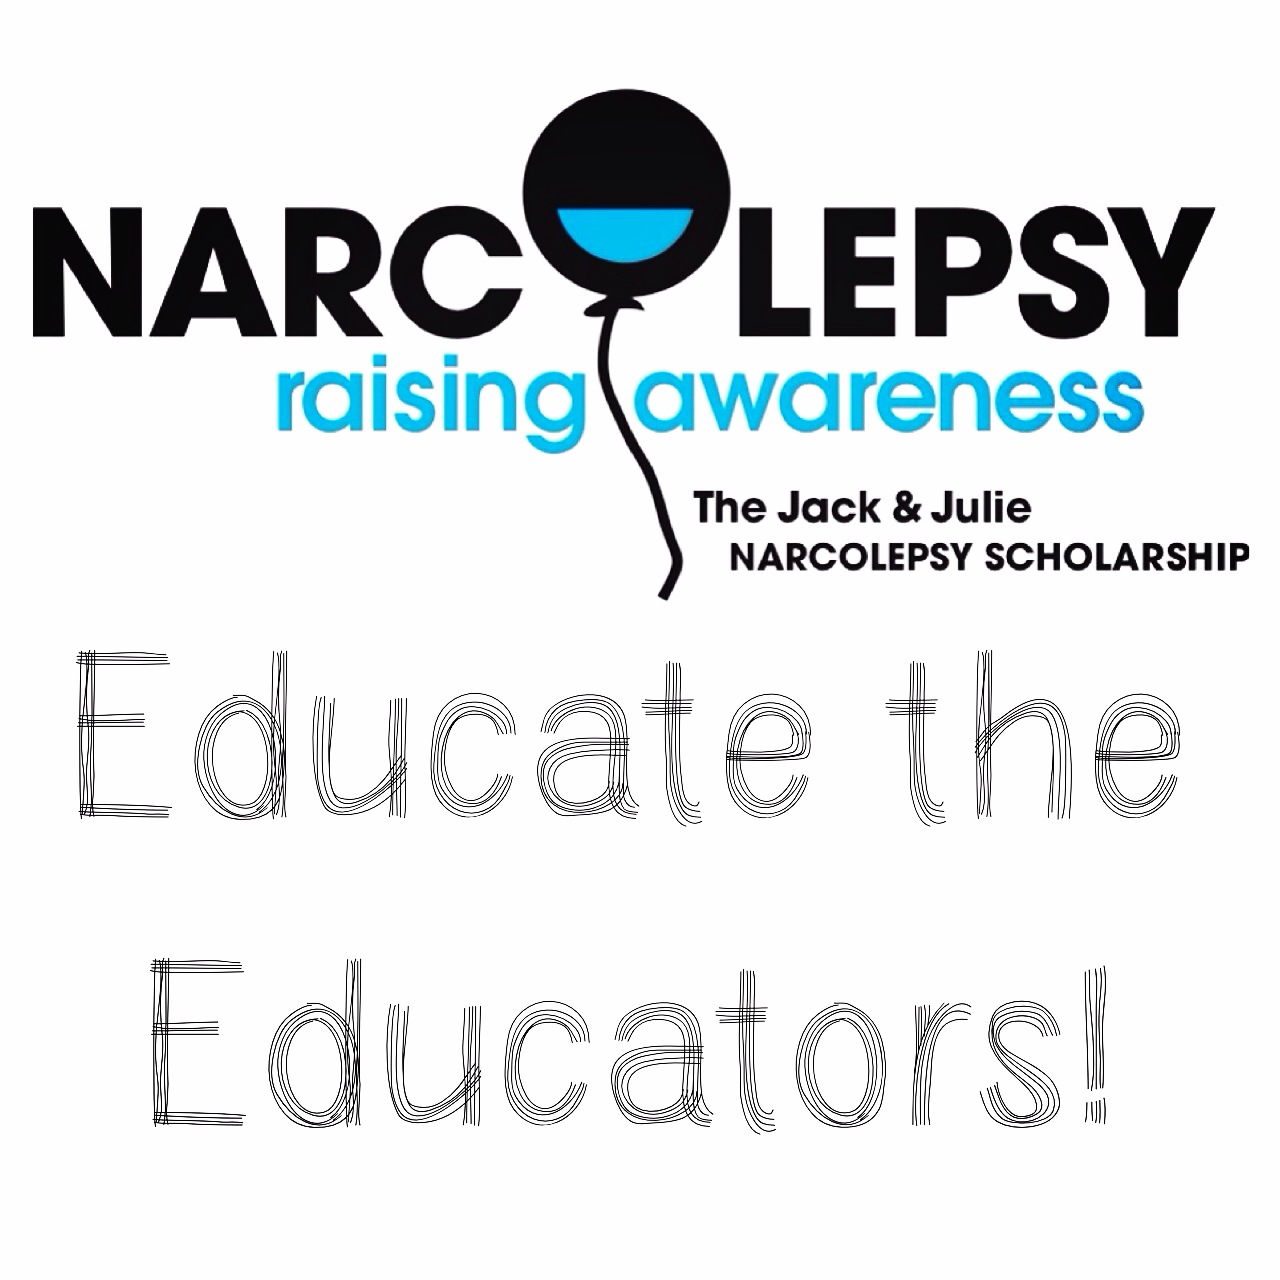 narcolepsy scholarship students college high school seniors education narcolespy awareness